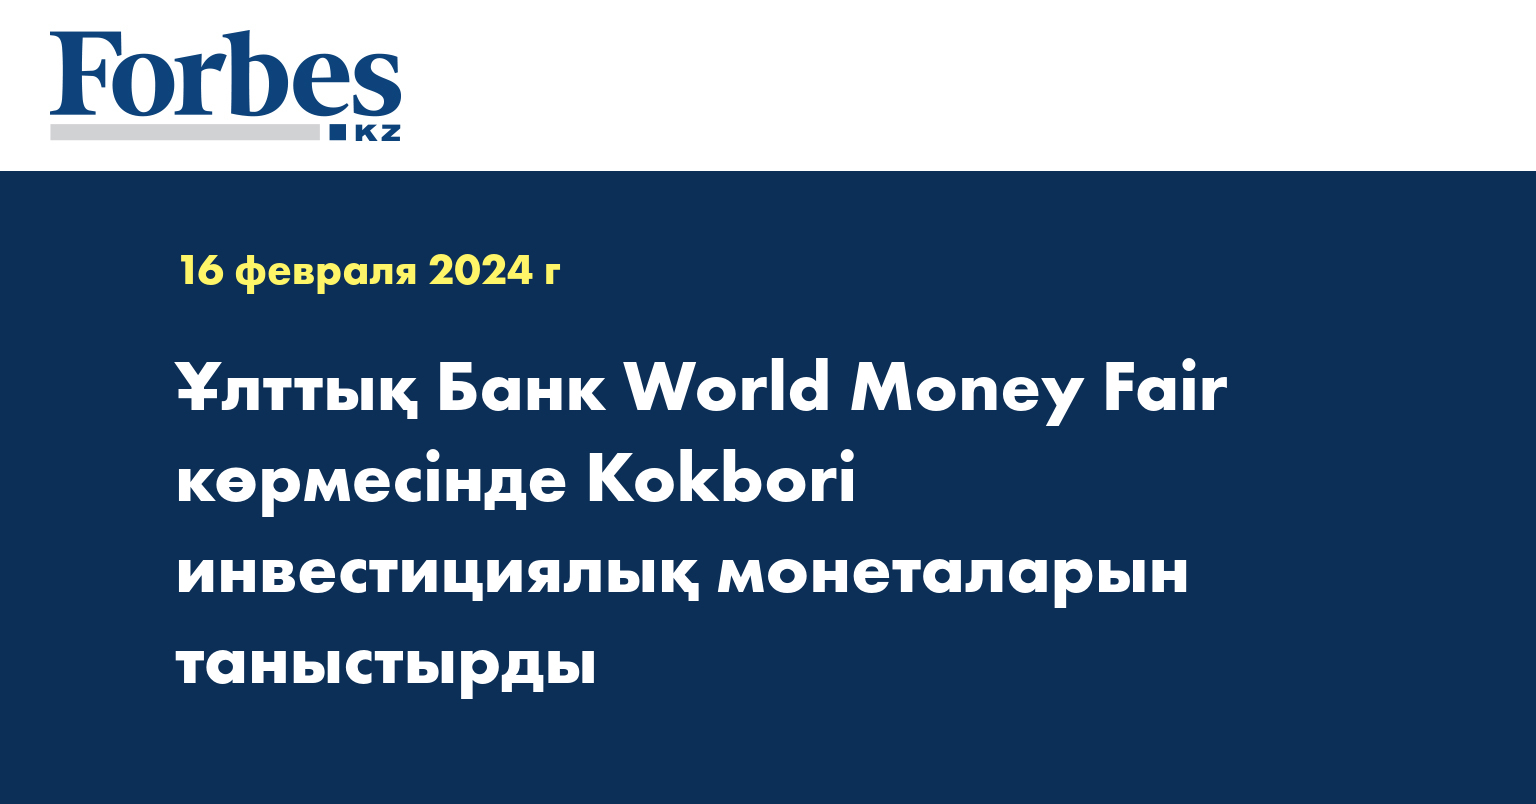 Ұлттық Банк World Money Fair көрмесінде Kokbori инвестициялық монеталарын таныстырды